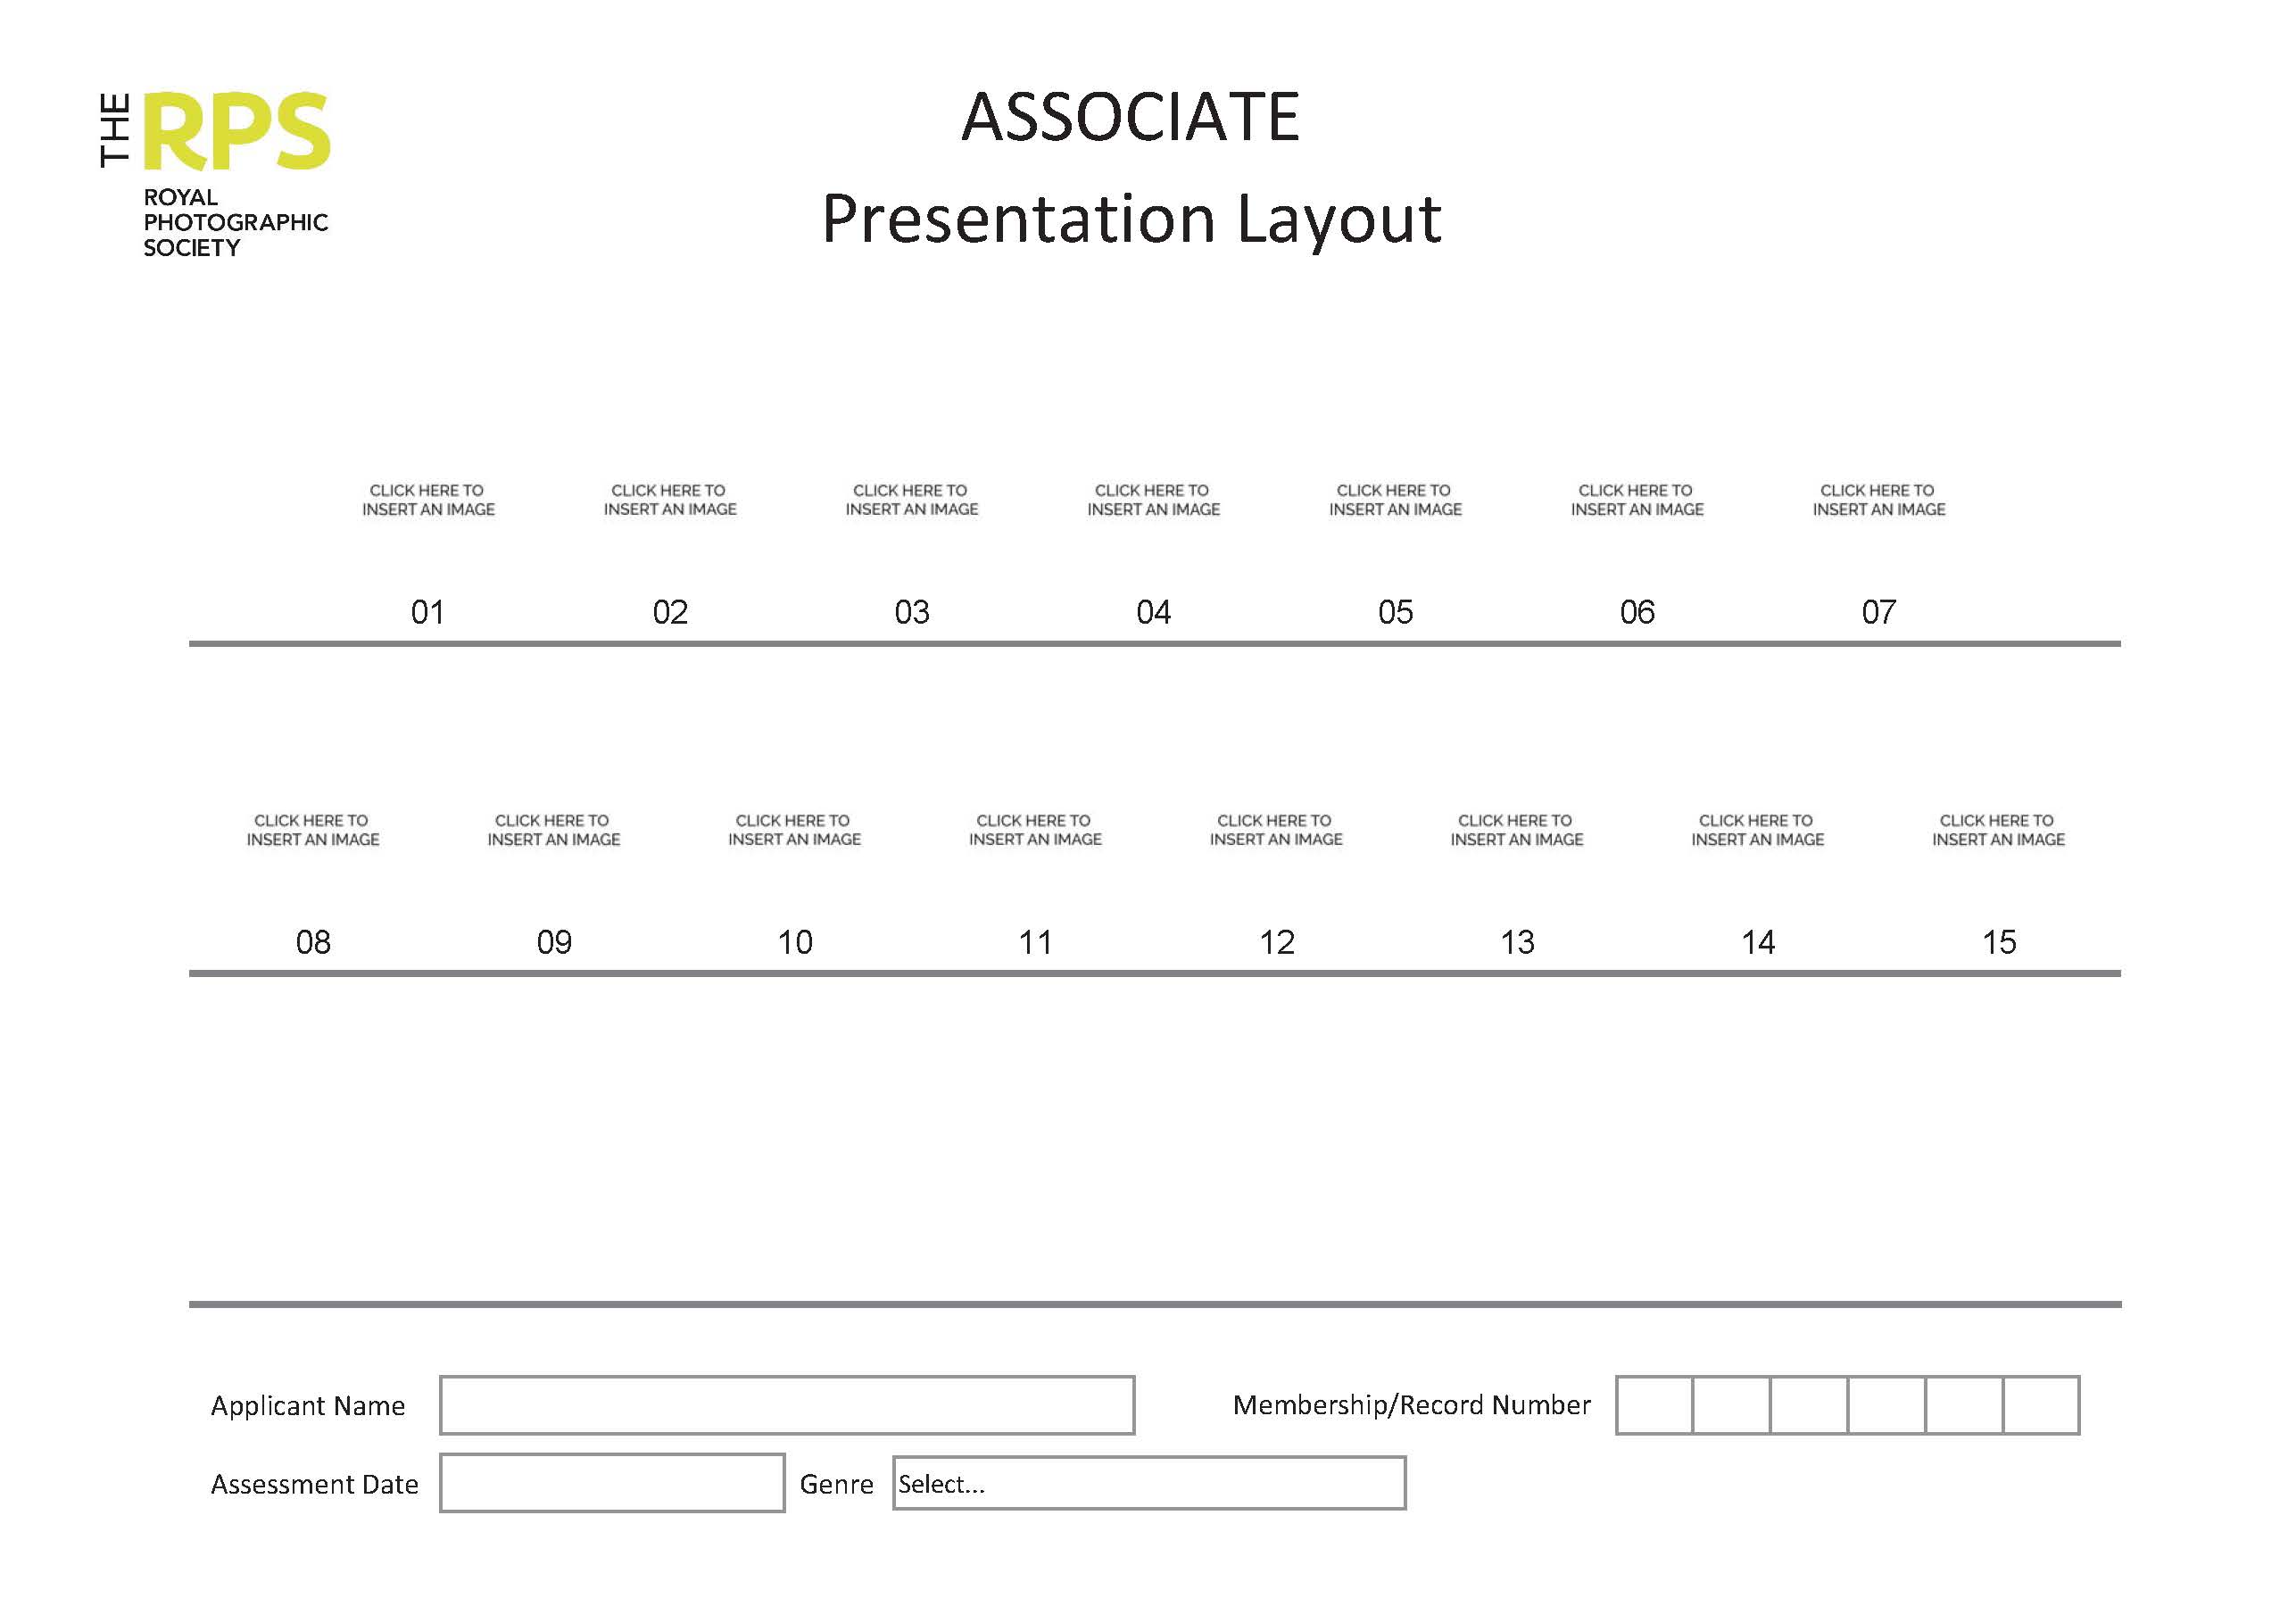 ARPS 2021 Presentation Layout 7 8